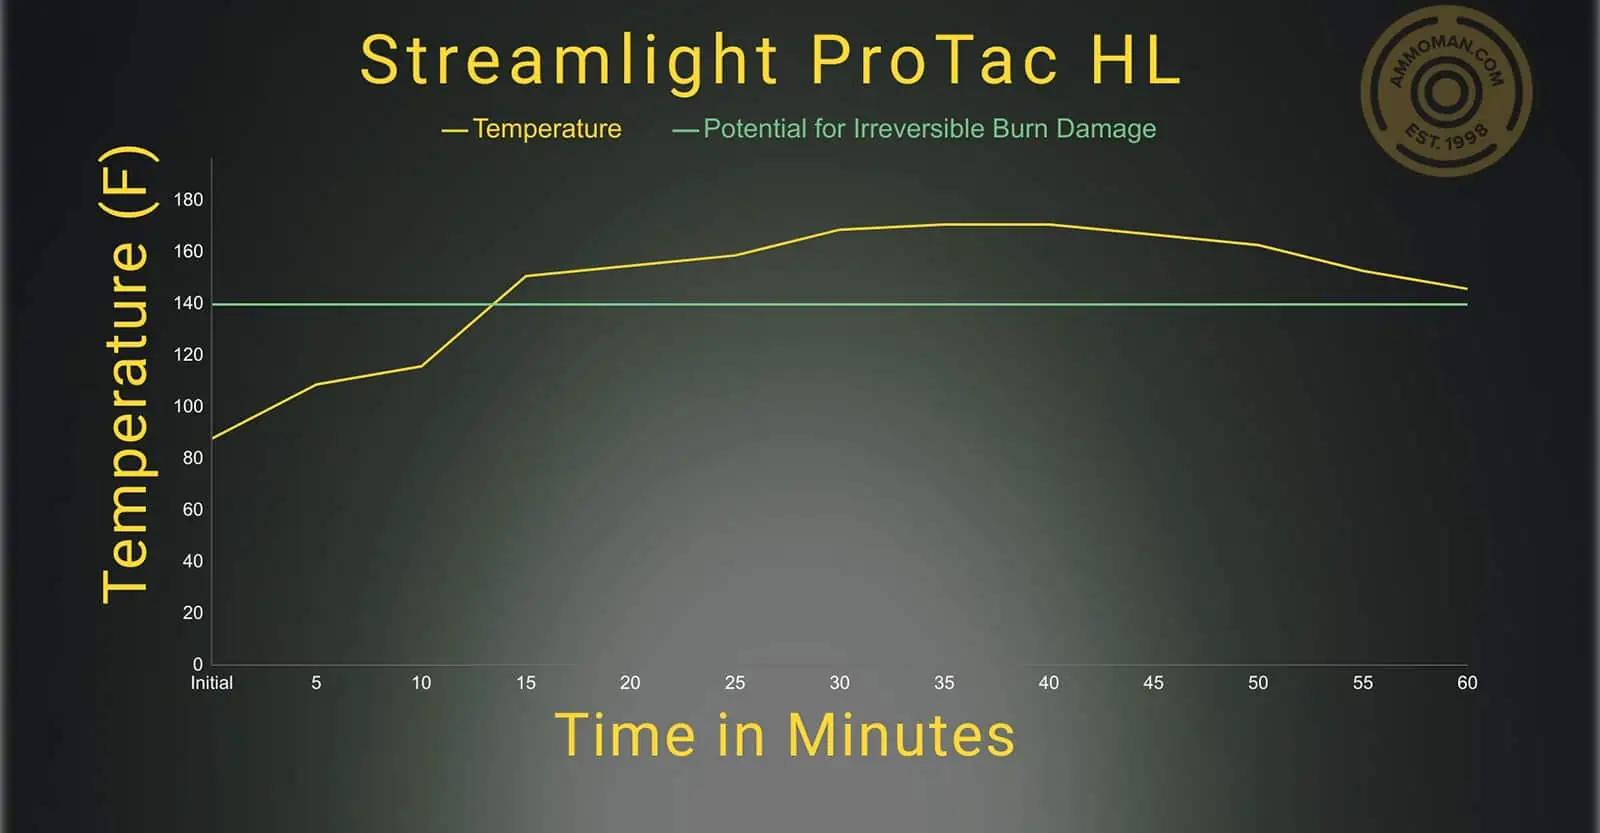 Streamlight ProTac HL temperature profile